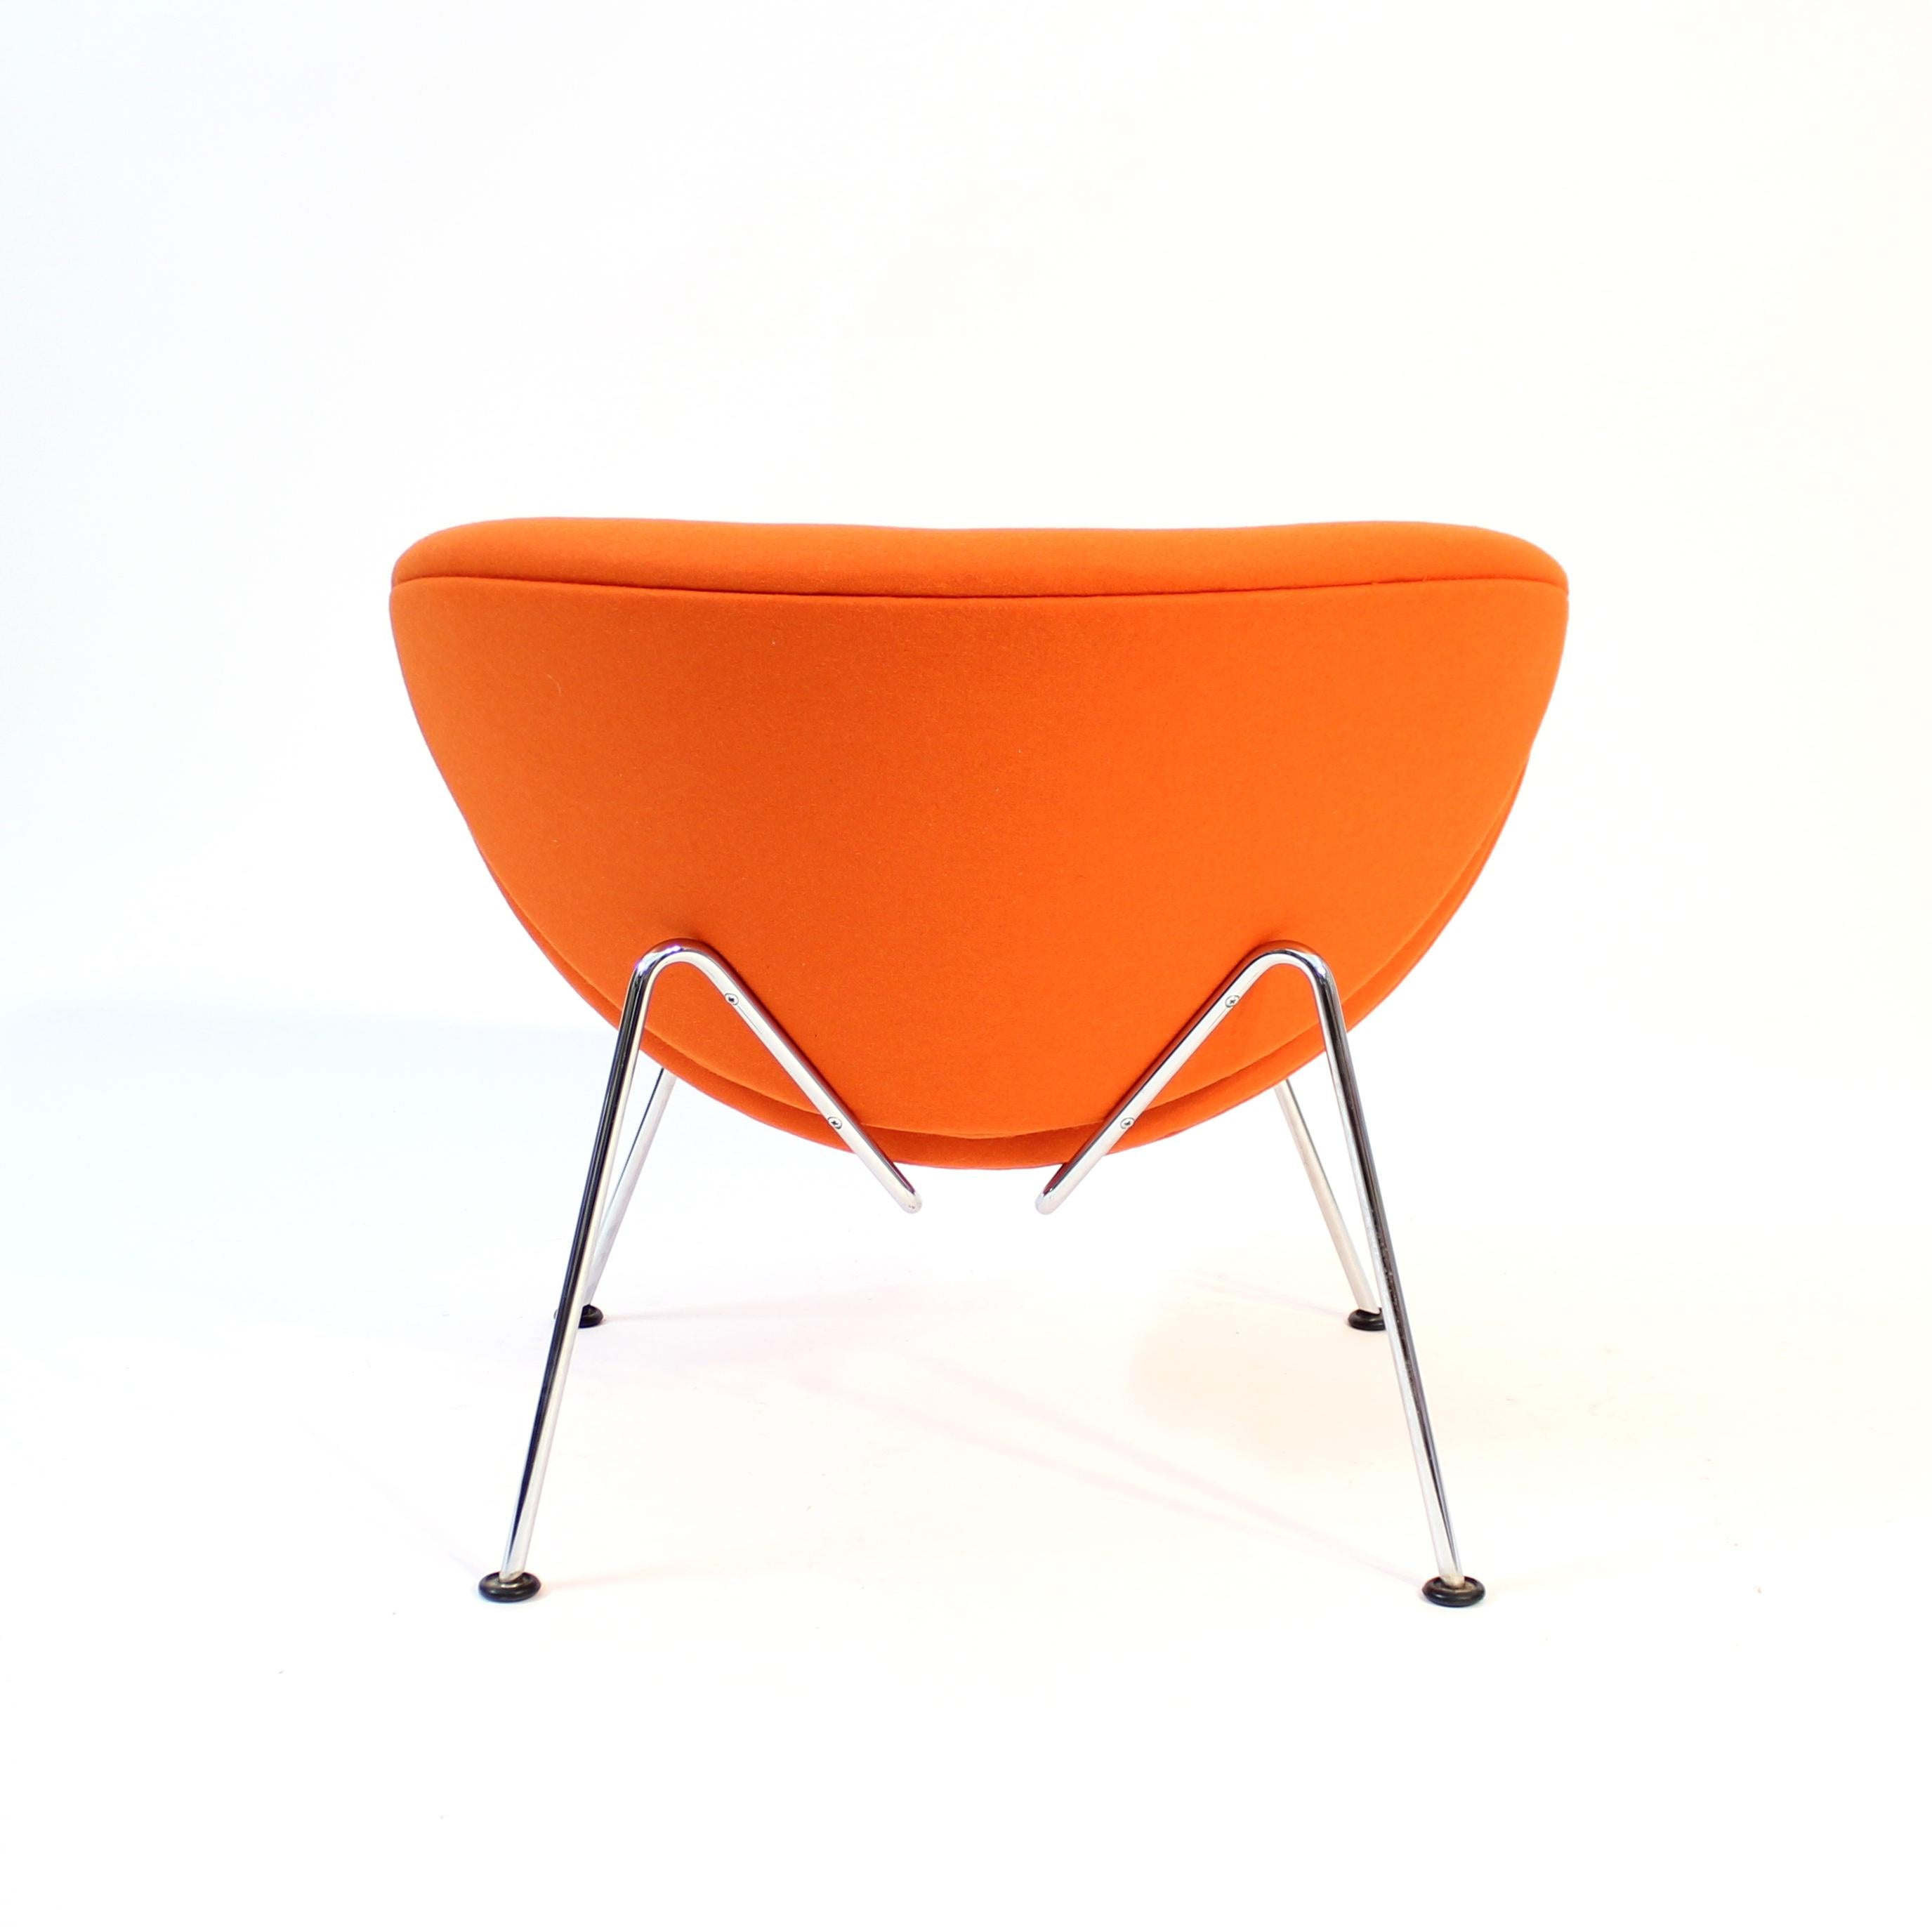 Pierre Paulin, Orange Slice chair, Artifort, 1960 For Sale 3